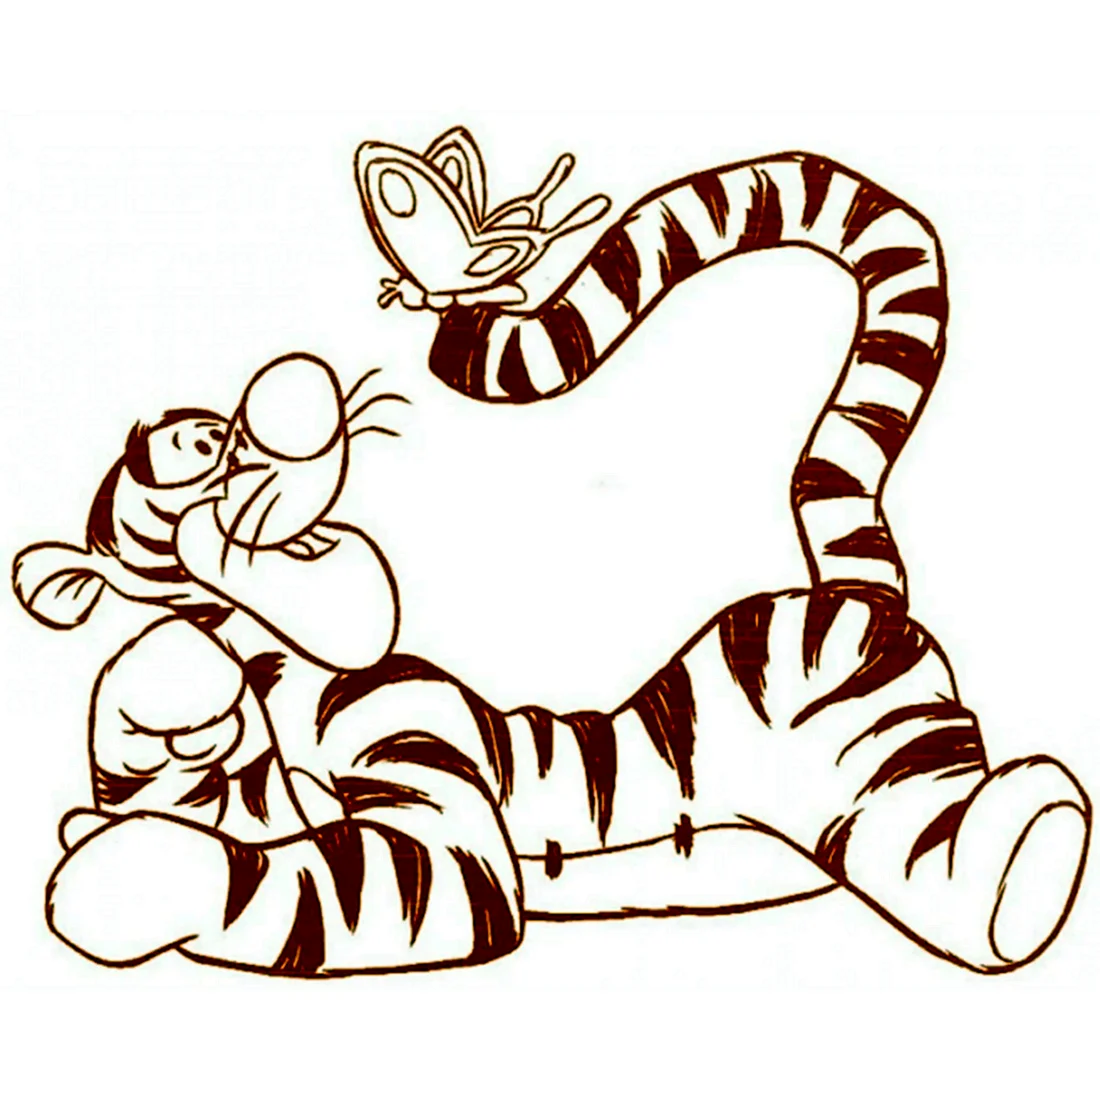 Рисунок тигренка для срисовки